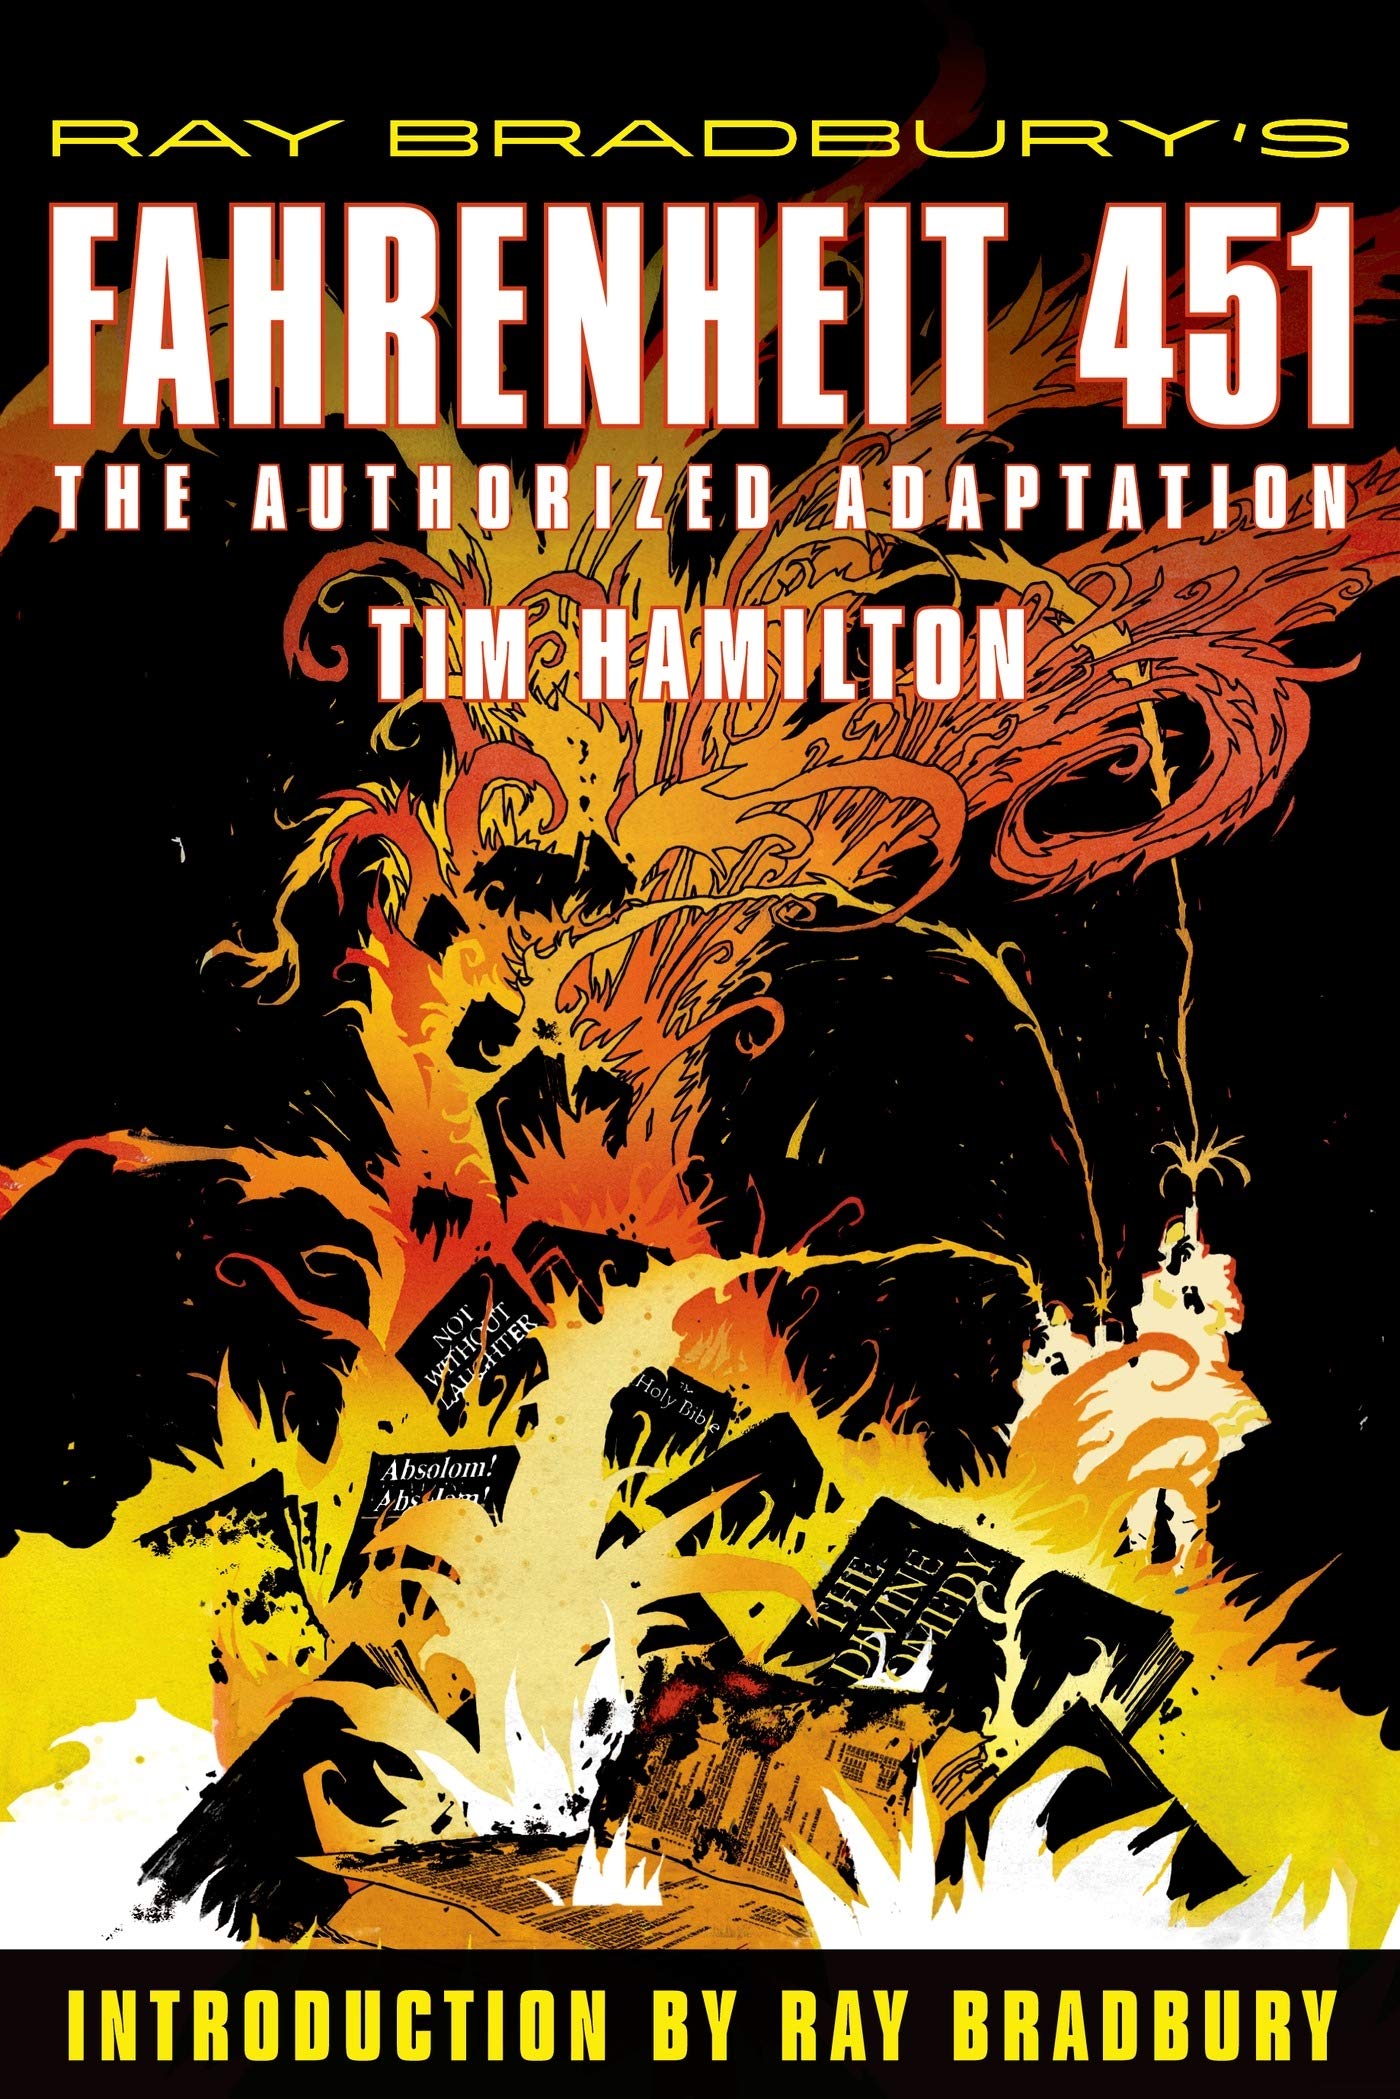 The cover of Ray Bradbury's Fahrenheit 451: The Authorized Adaptation graphic novel illustrated by Tim Hamilton